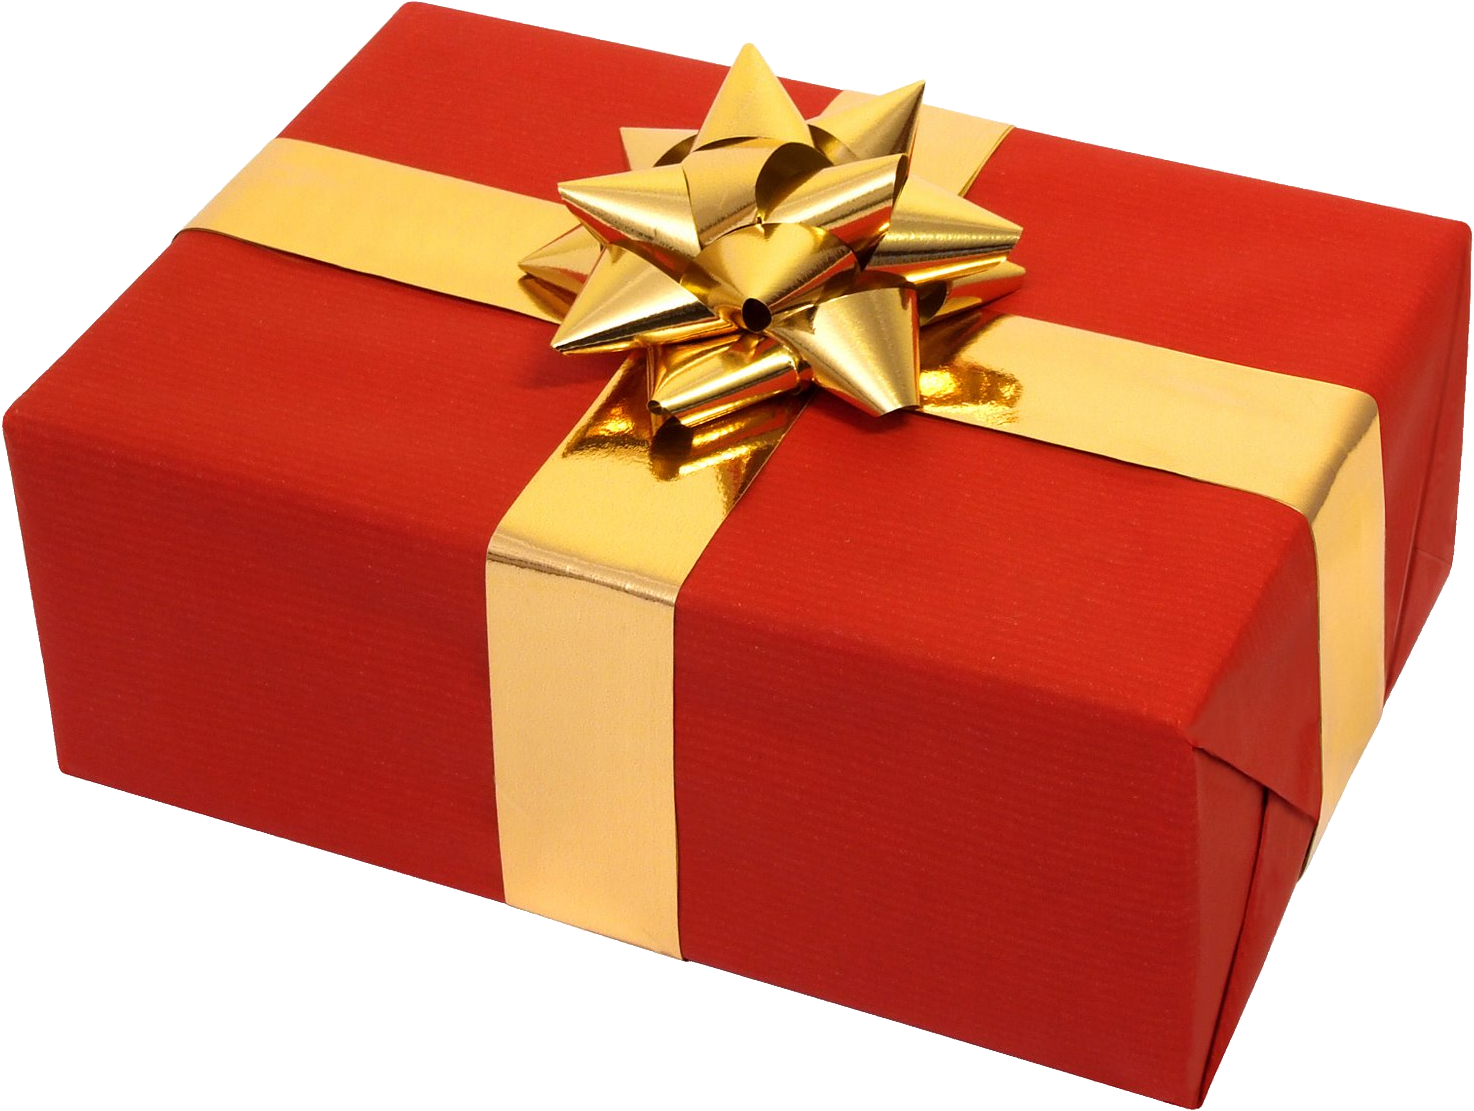 Box Birthday Gift Free HQ Image PNG Image